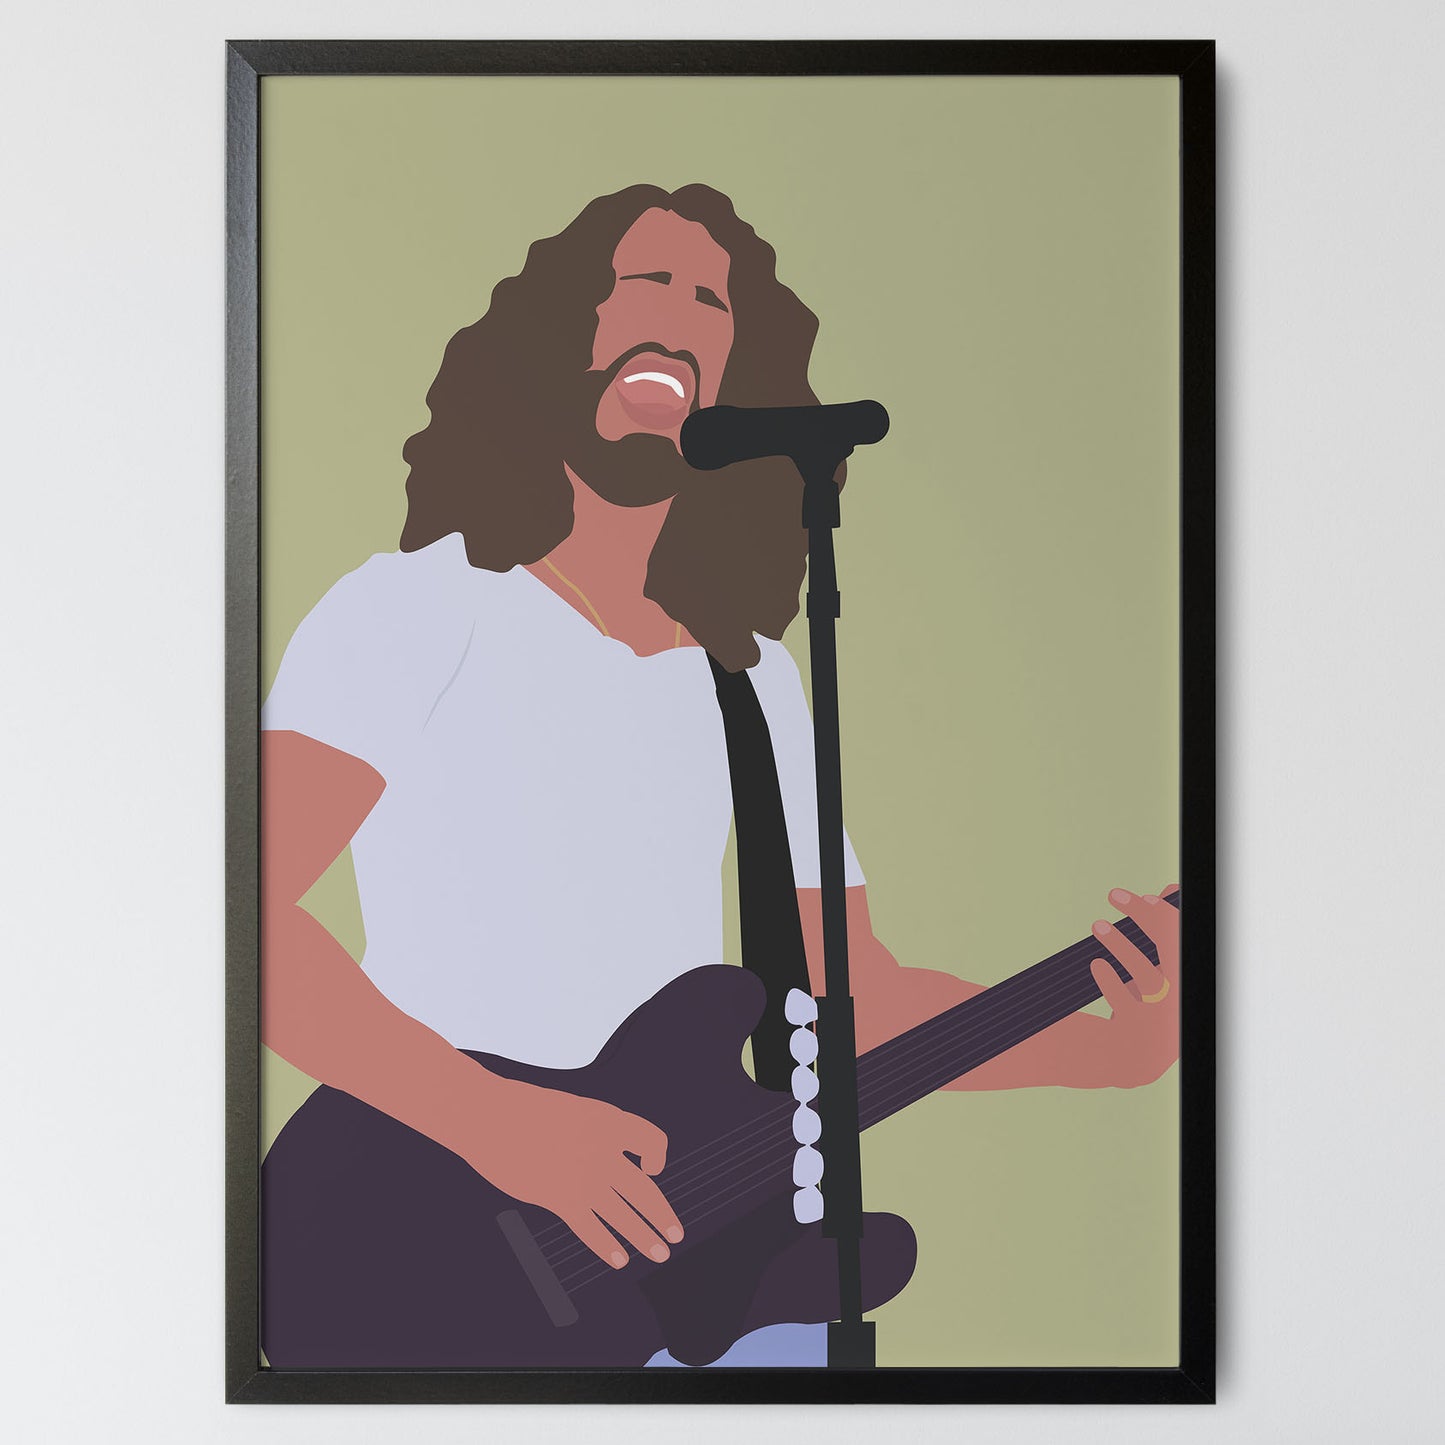 Chris Cornell Poster